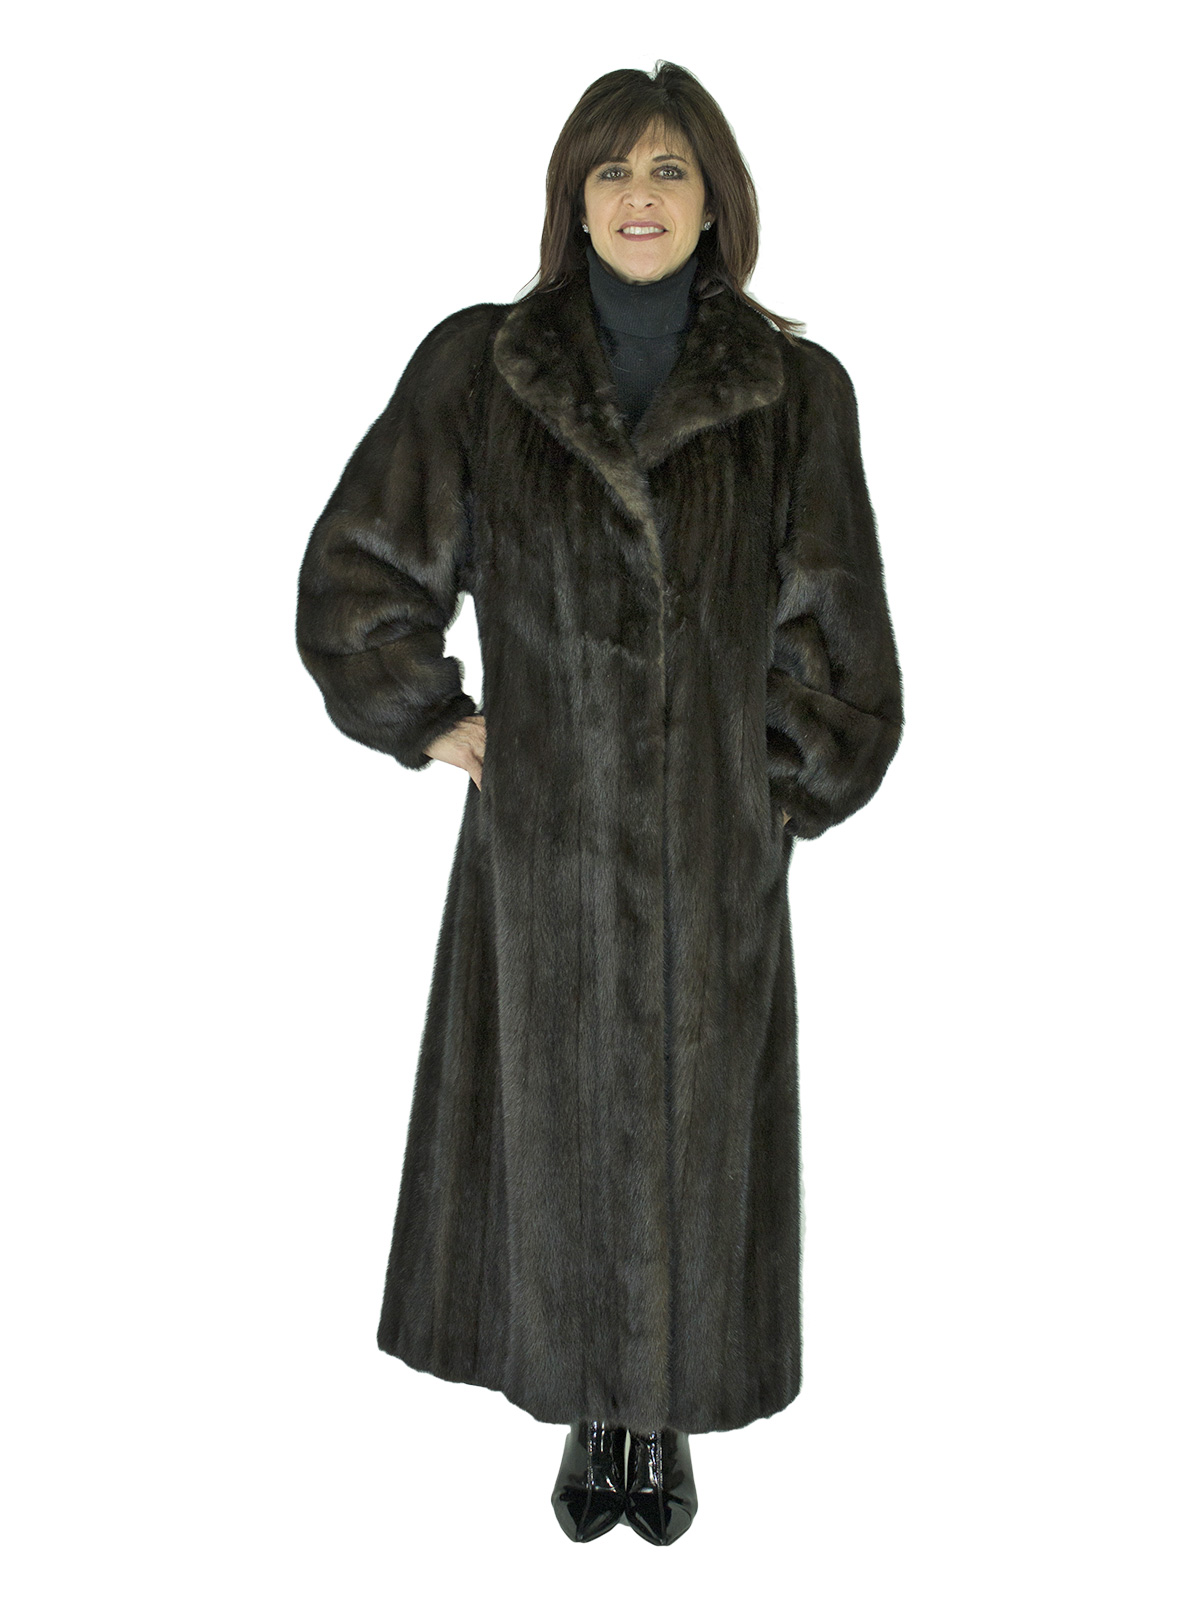 Very Dark Mahogany Female Mink Fur Coat - Women's Mink Coat - Medium ...